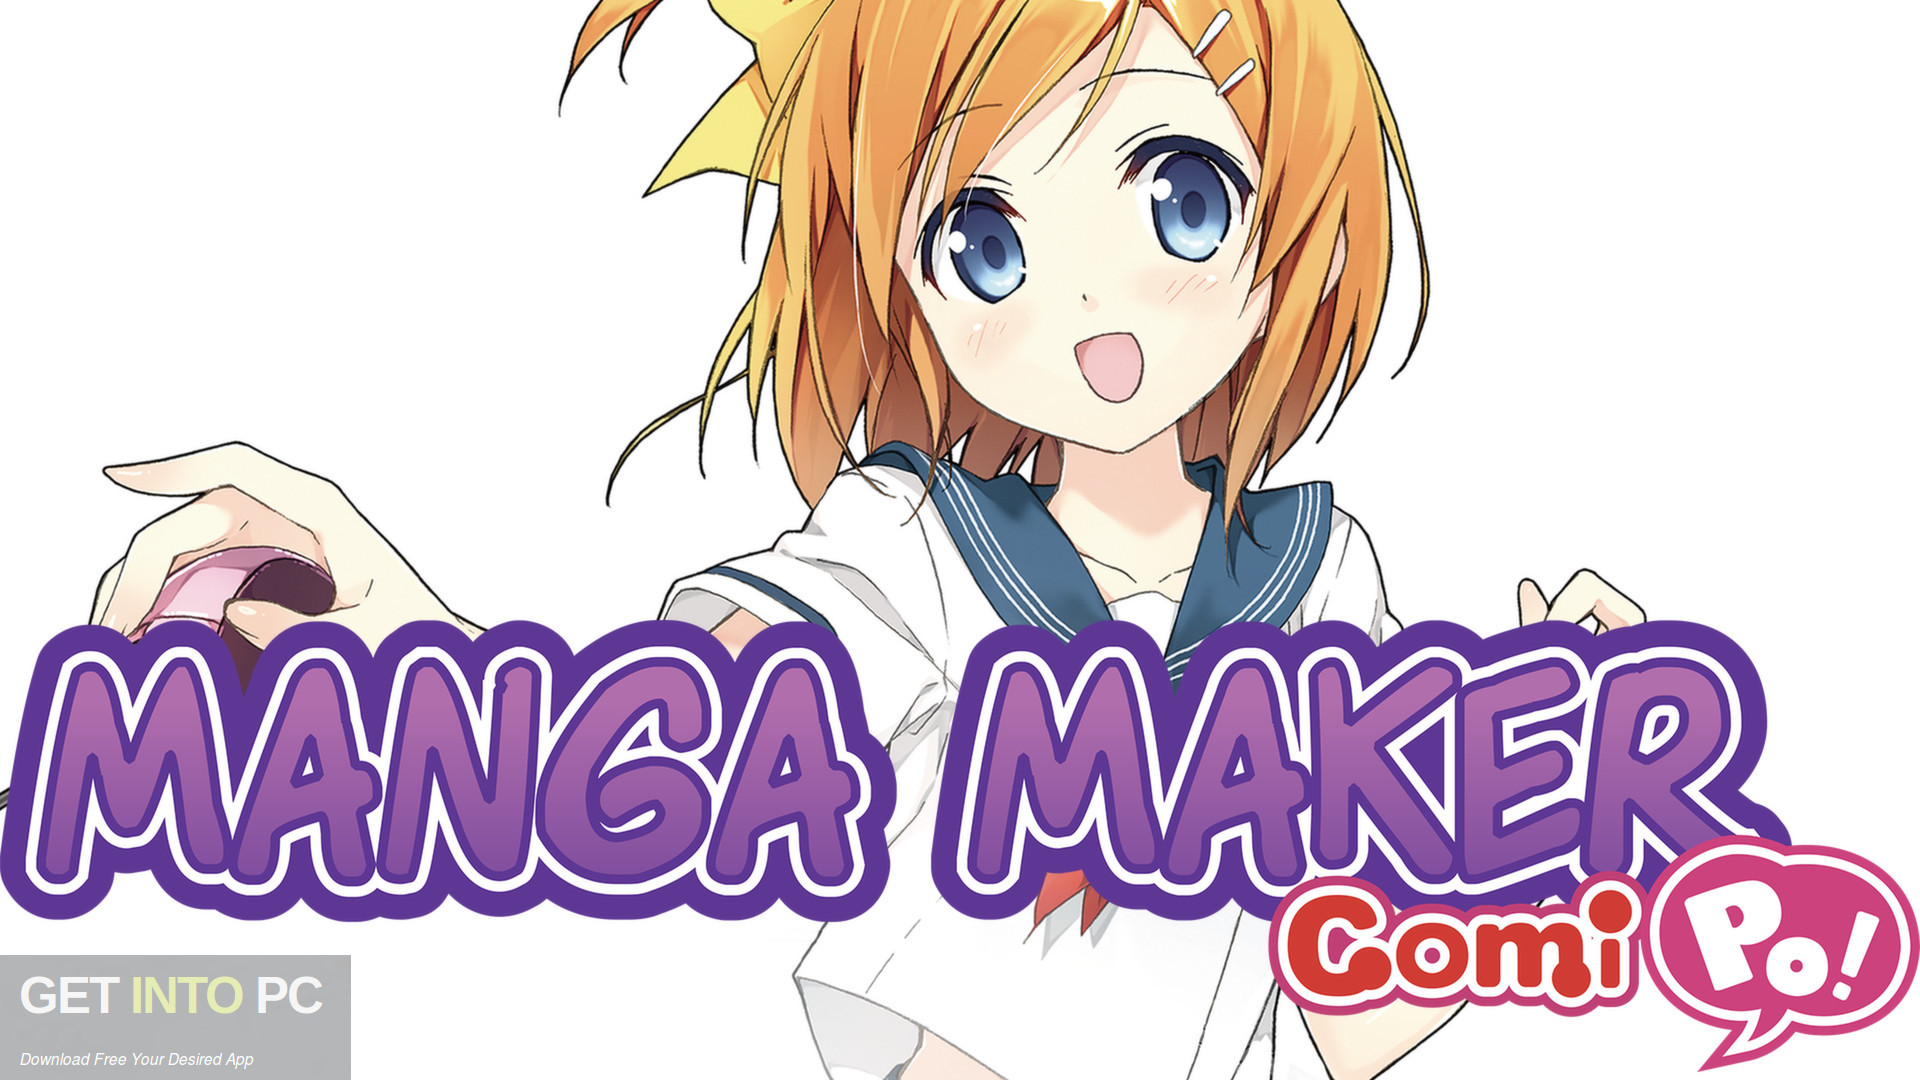 manga maker comipo full version